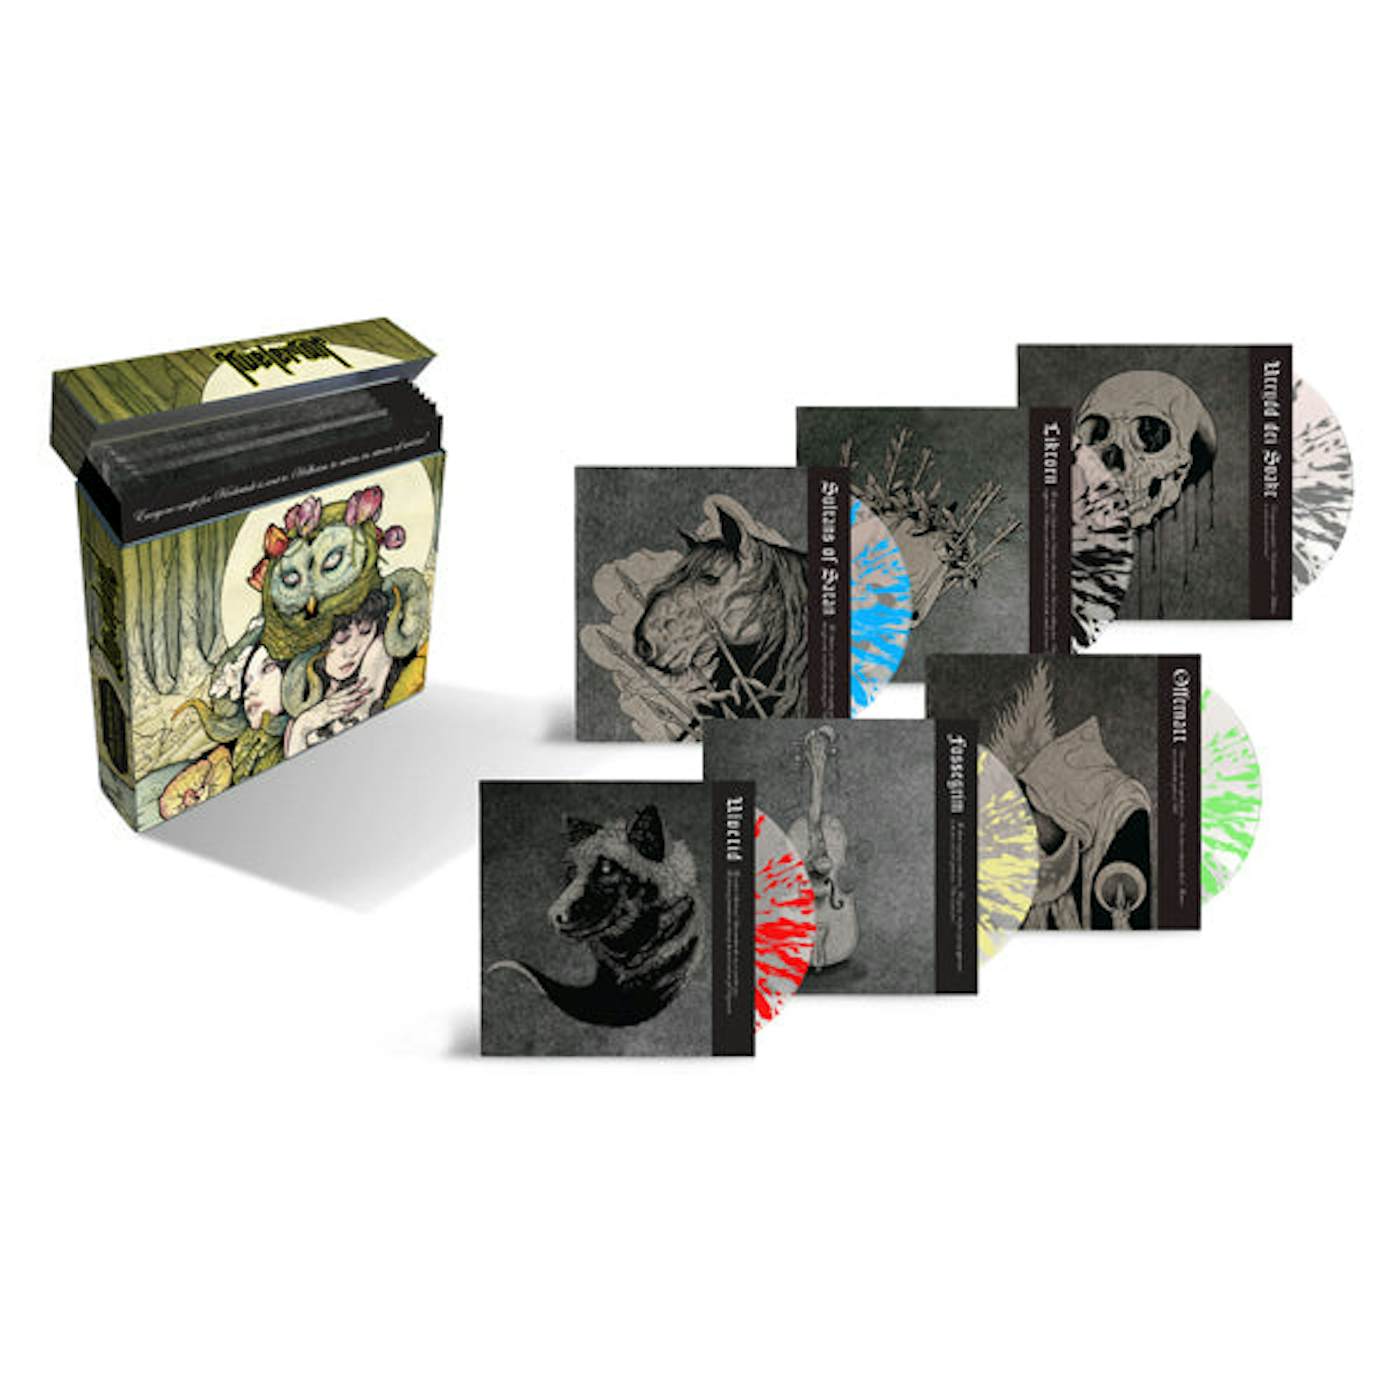 Kvelertak LP - Kvelertak (6 Disc Box Set + Patch) (Plastic Head Exclusive Splatter Vinyl)